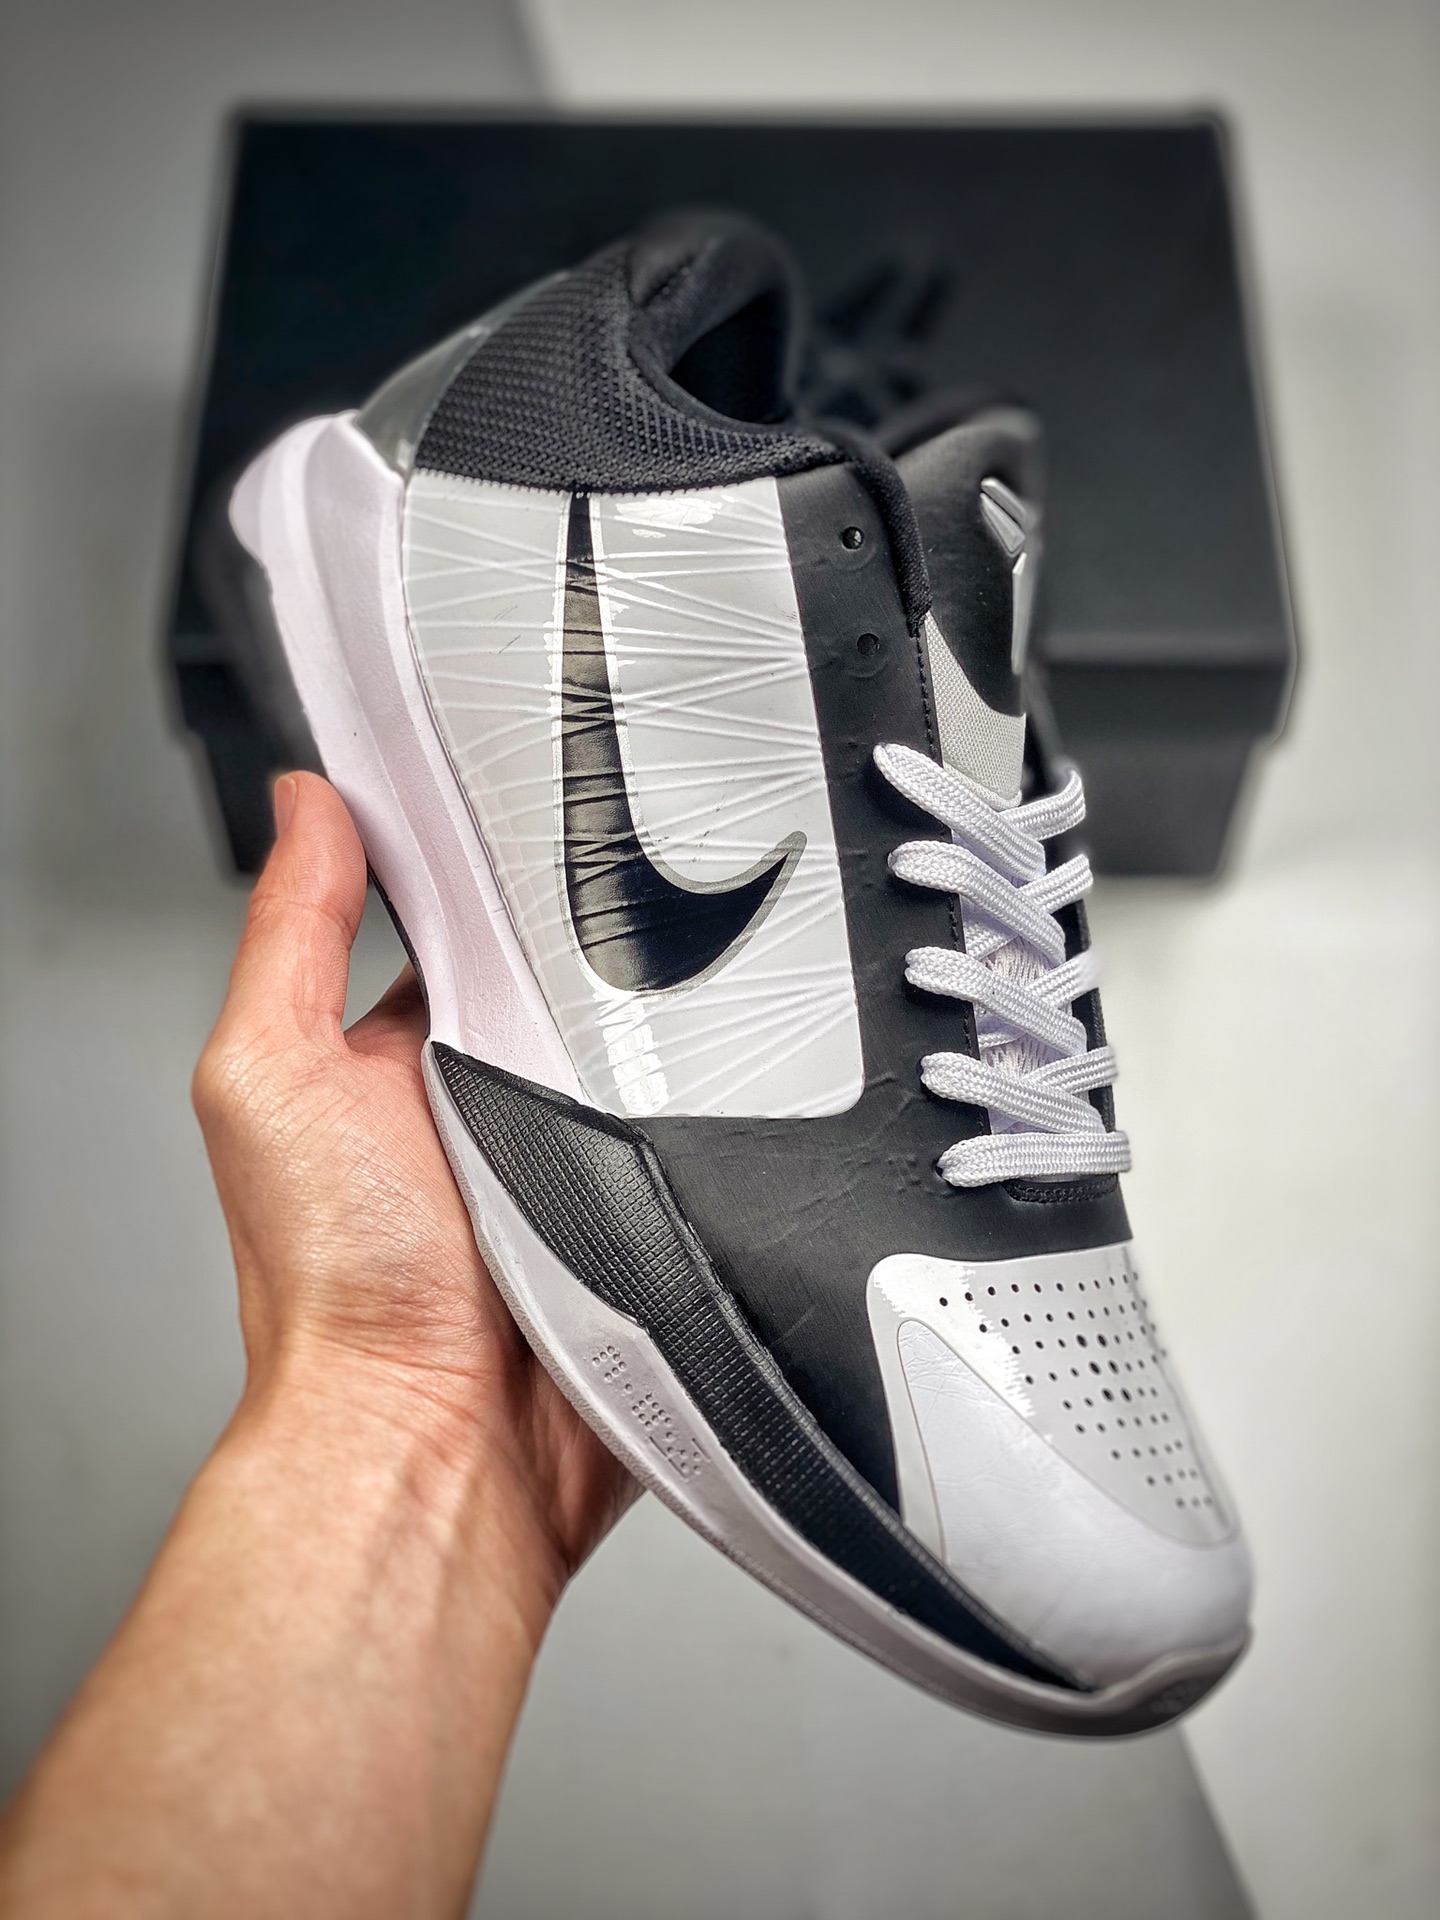 Nike Zoom Kobe 5 TB 'White Black' 407710-100 Shoes